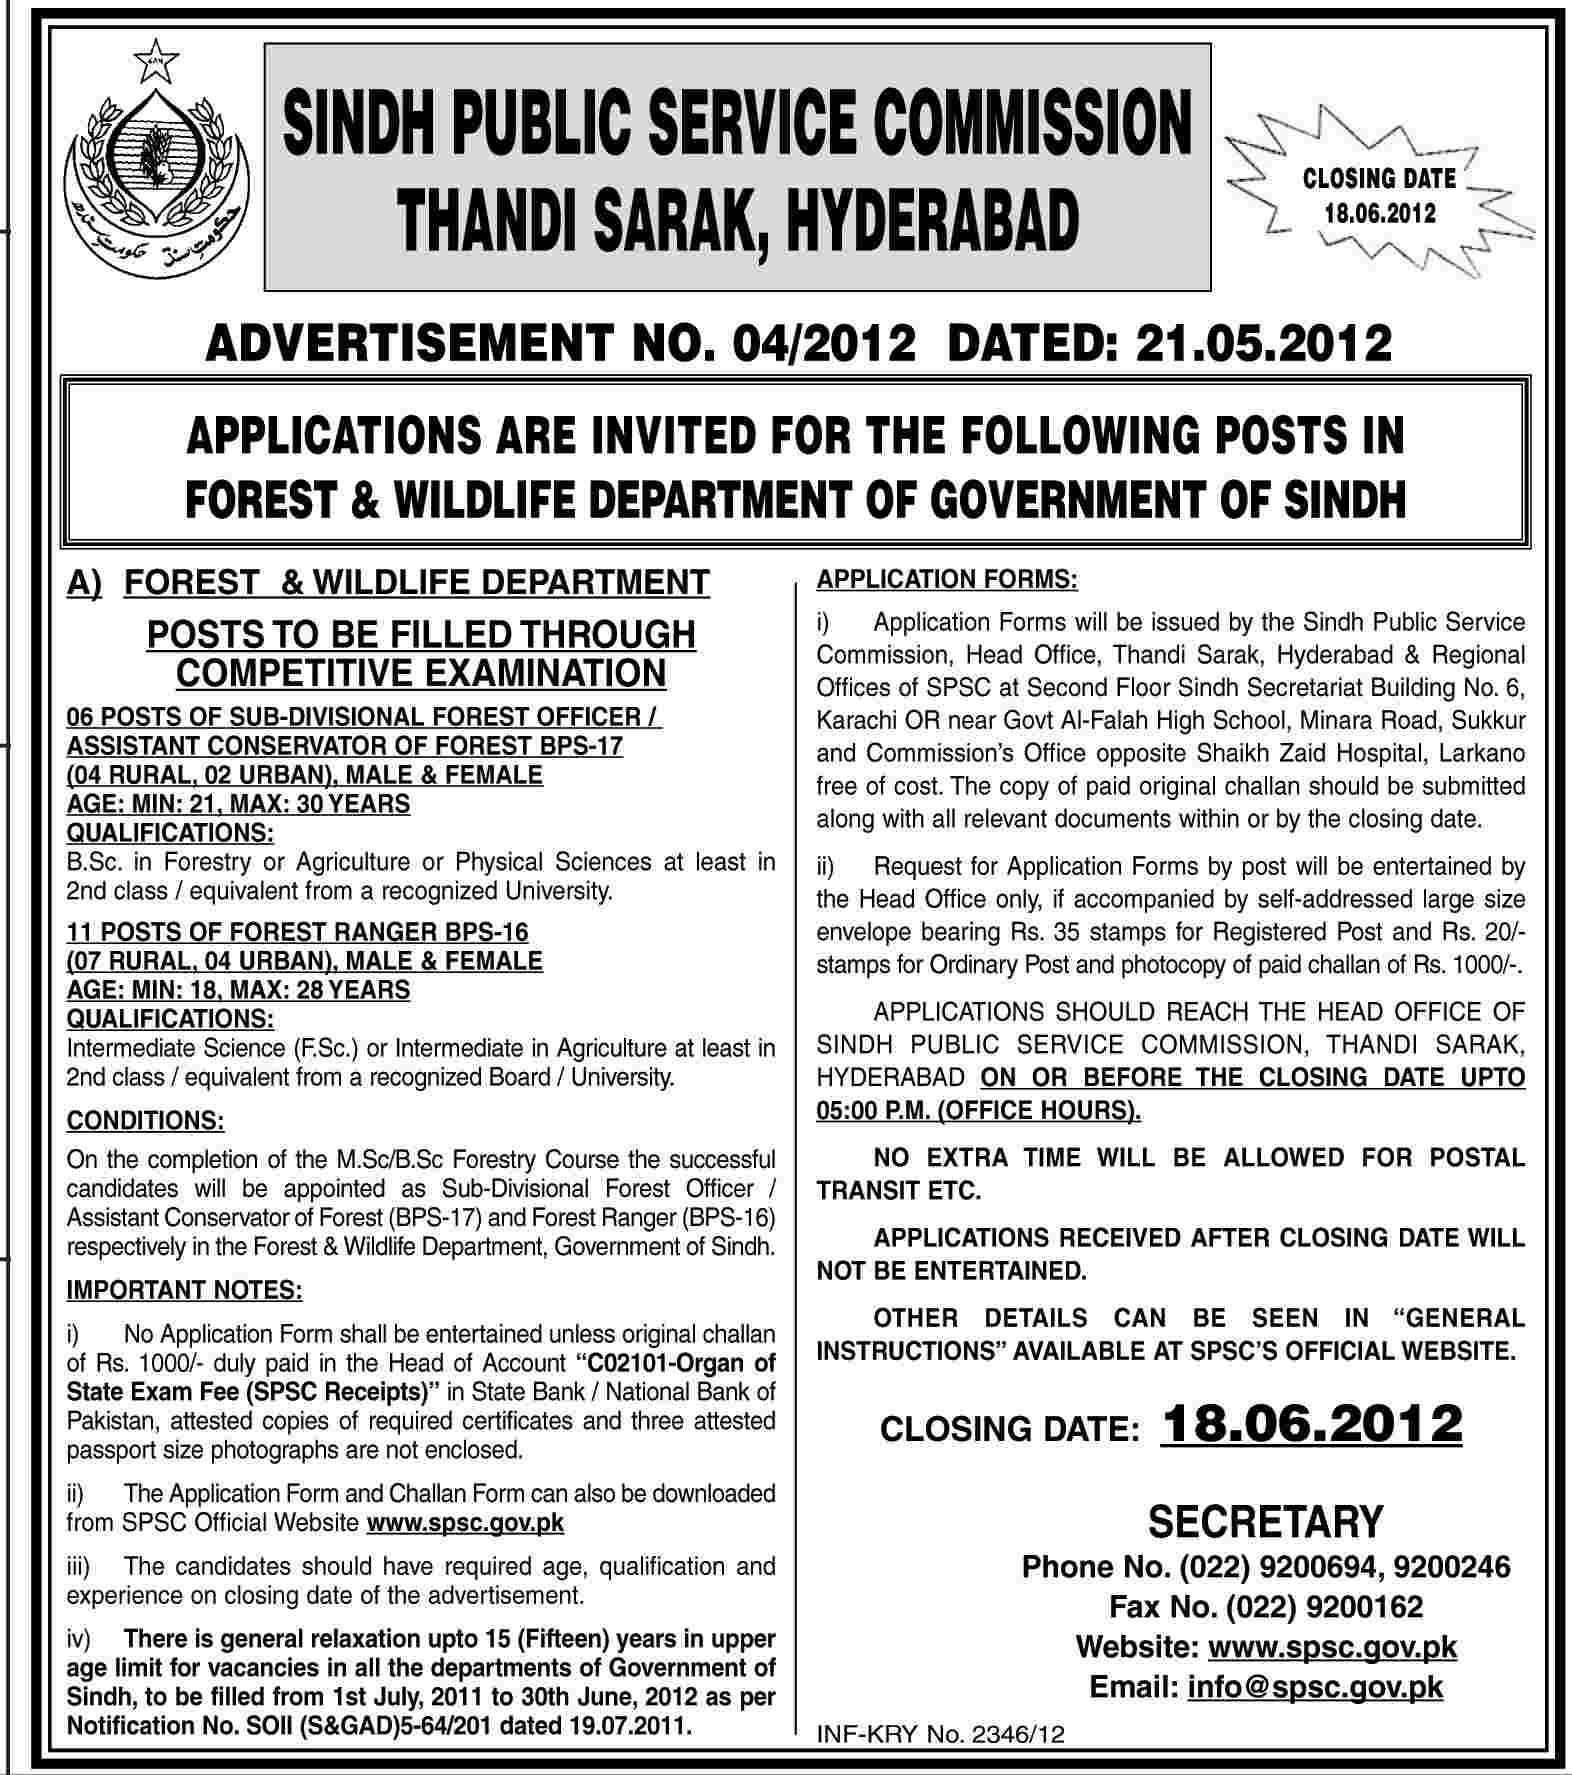 Jobs Under Sindh Public Service Commission (SPSC) in Forest & Wildlife Department (Govt. job)